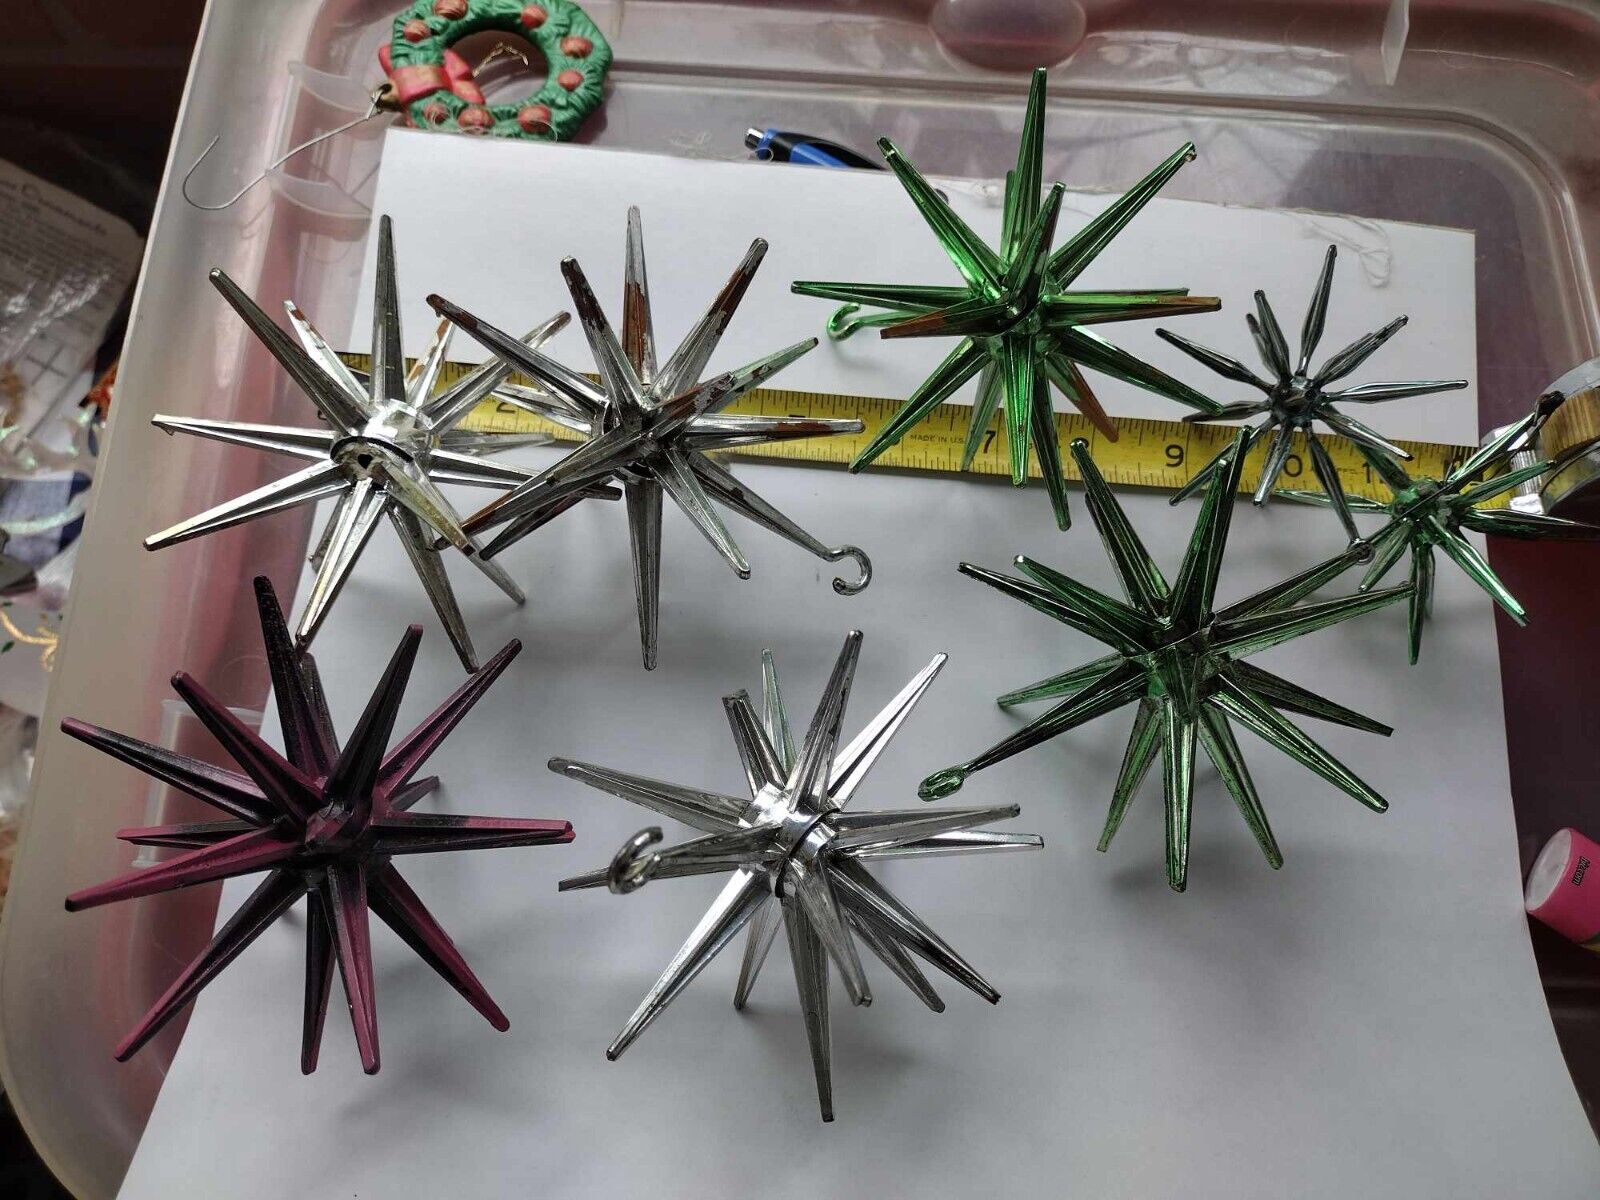 1960s Starburst sputnik Christmas ornaments